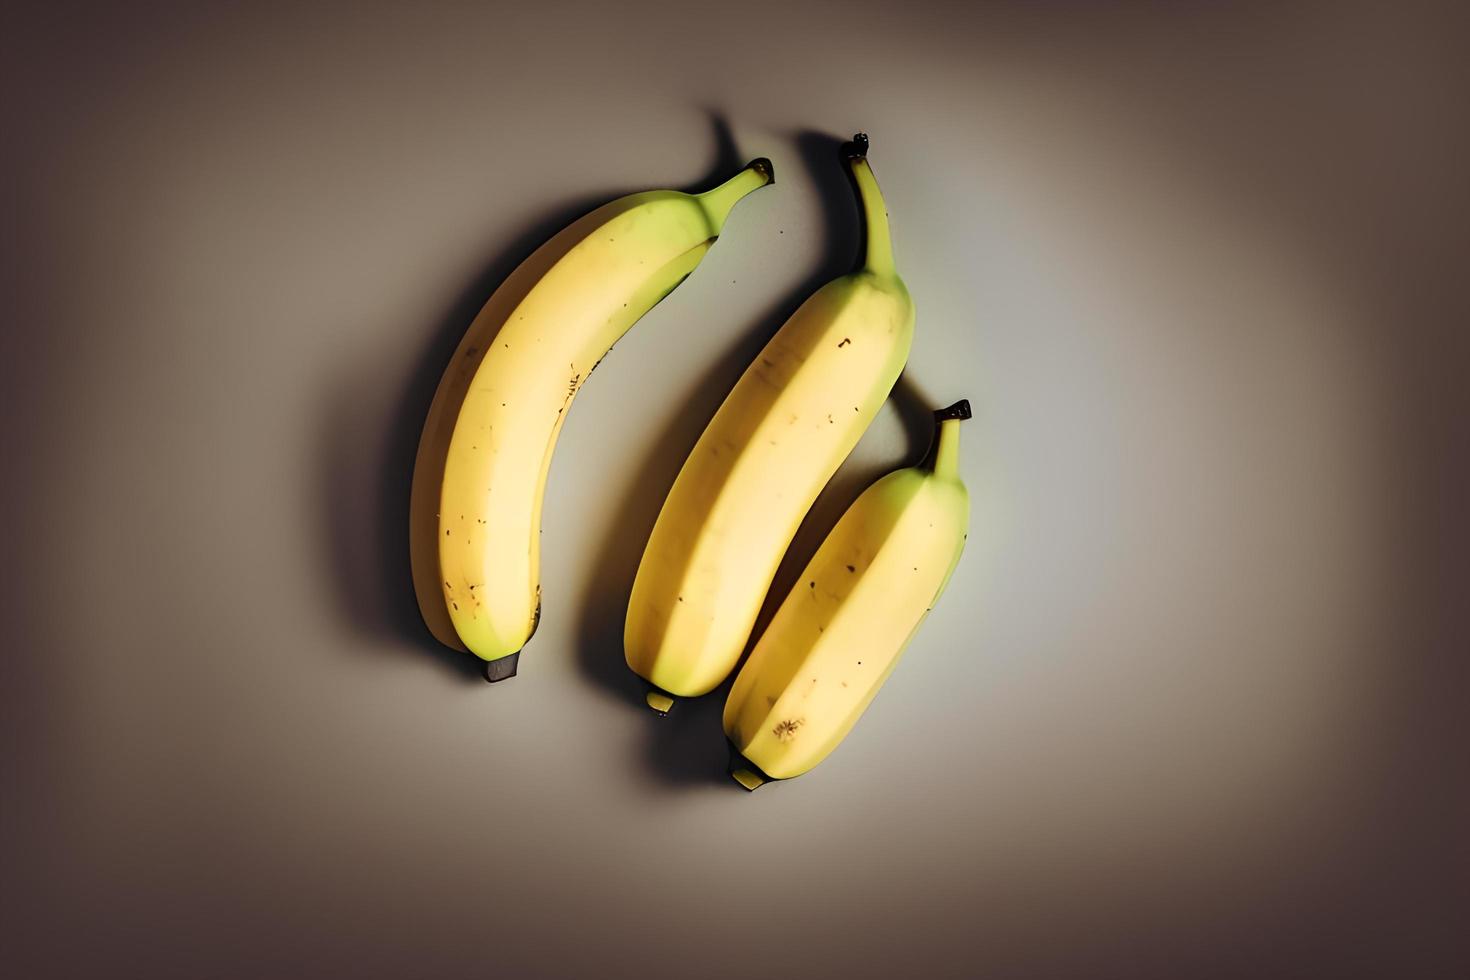 fresco banane superiore Visualizza foto